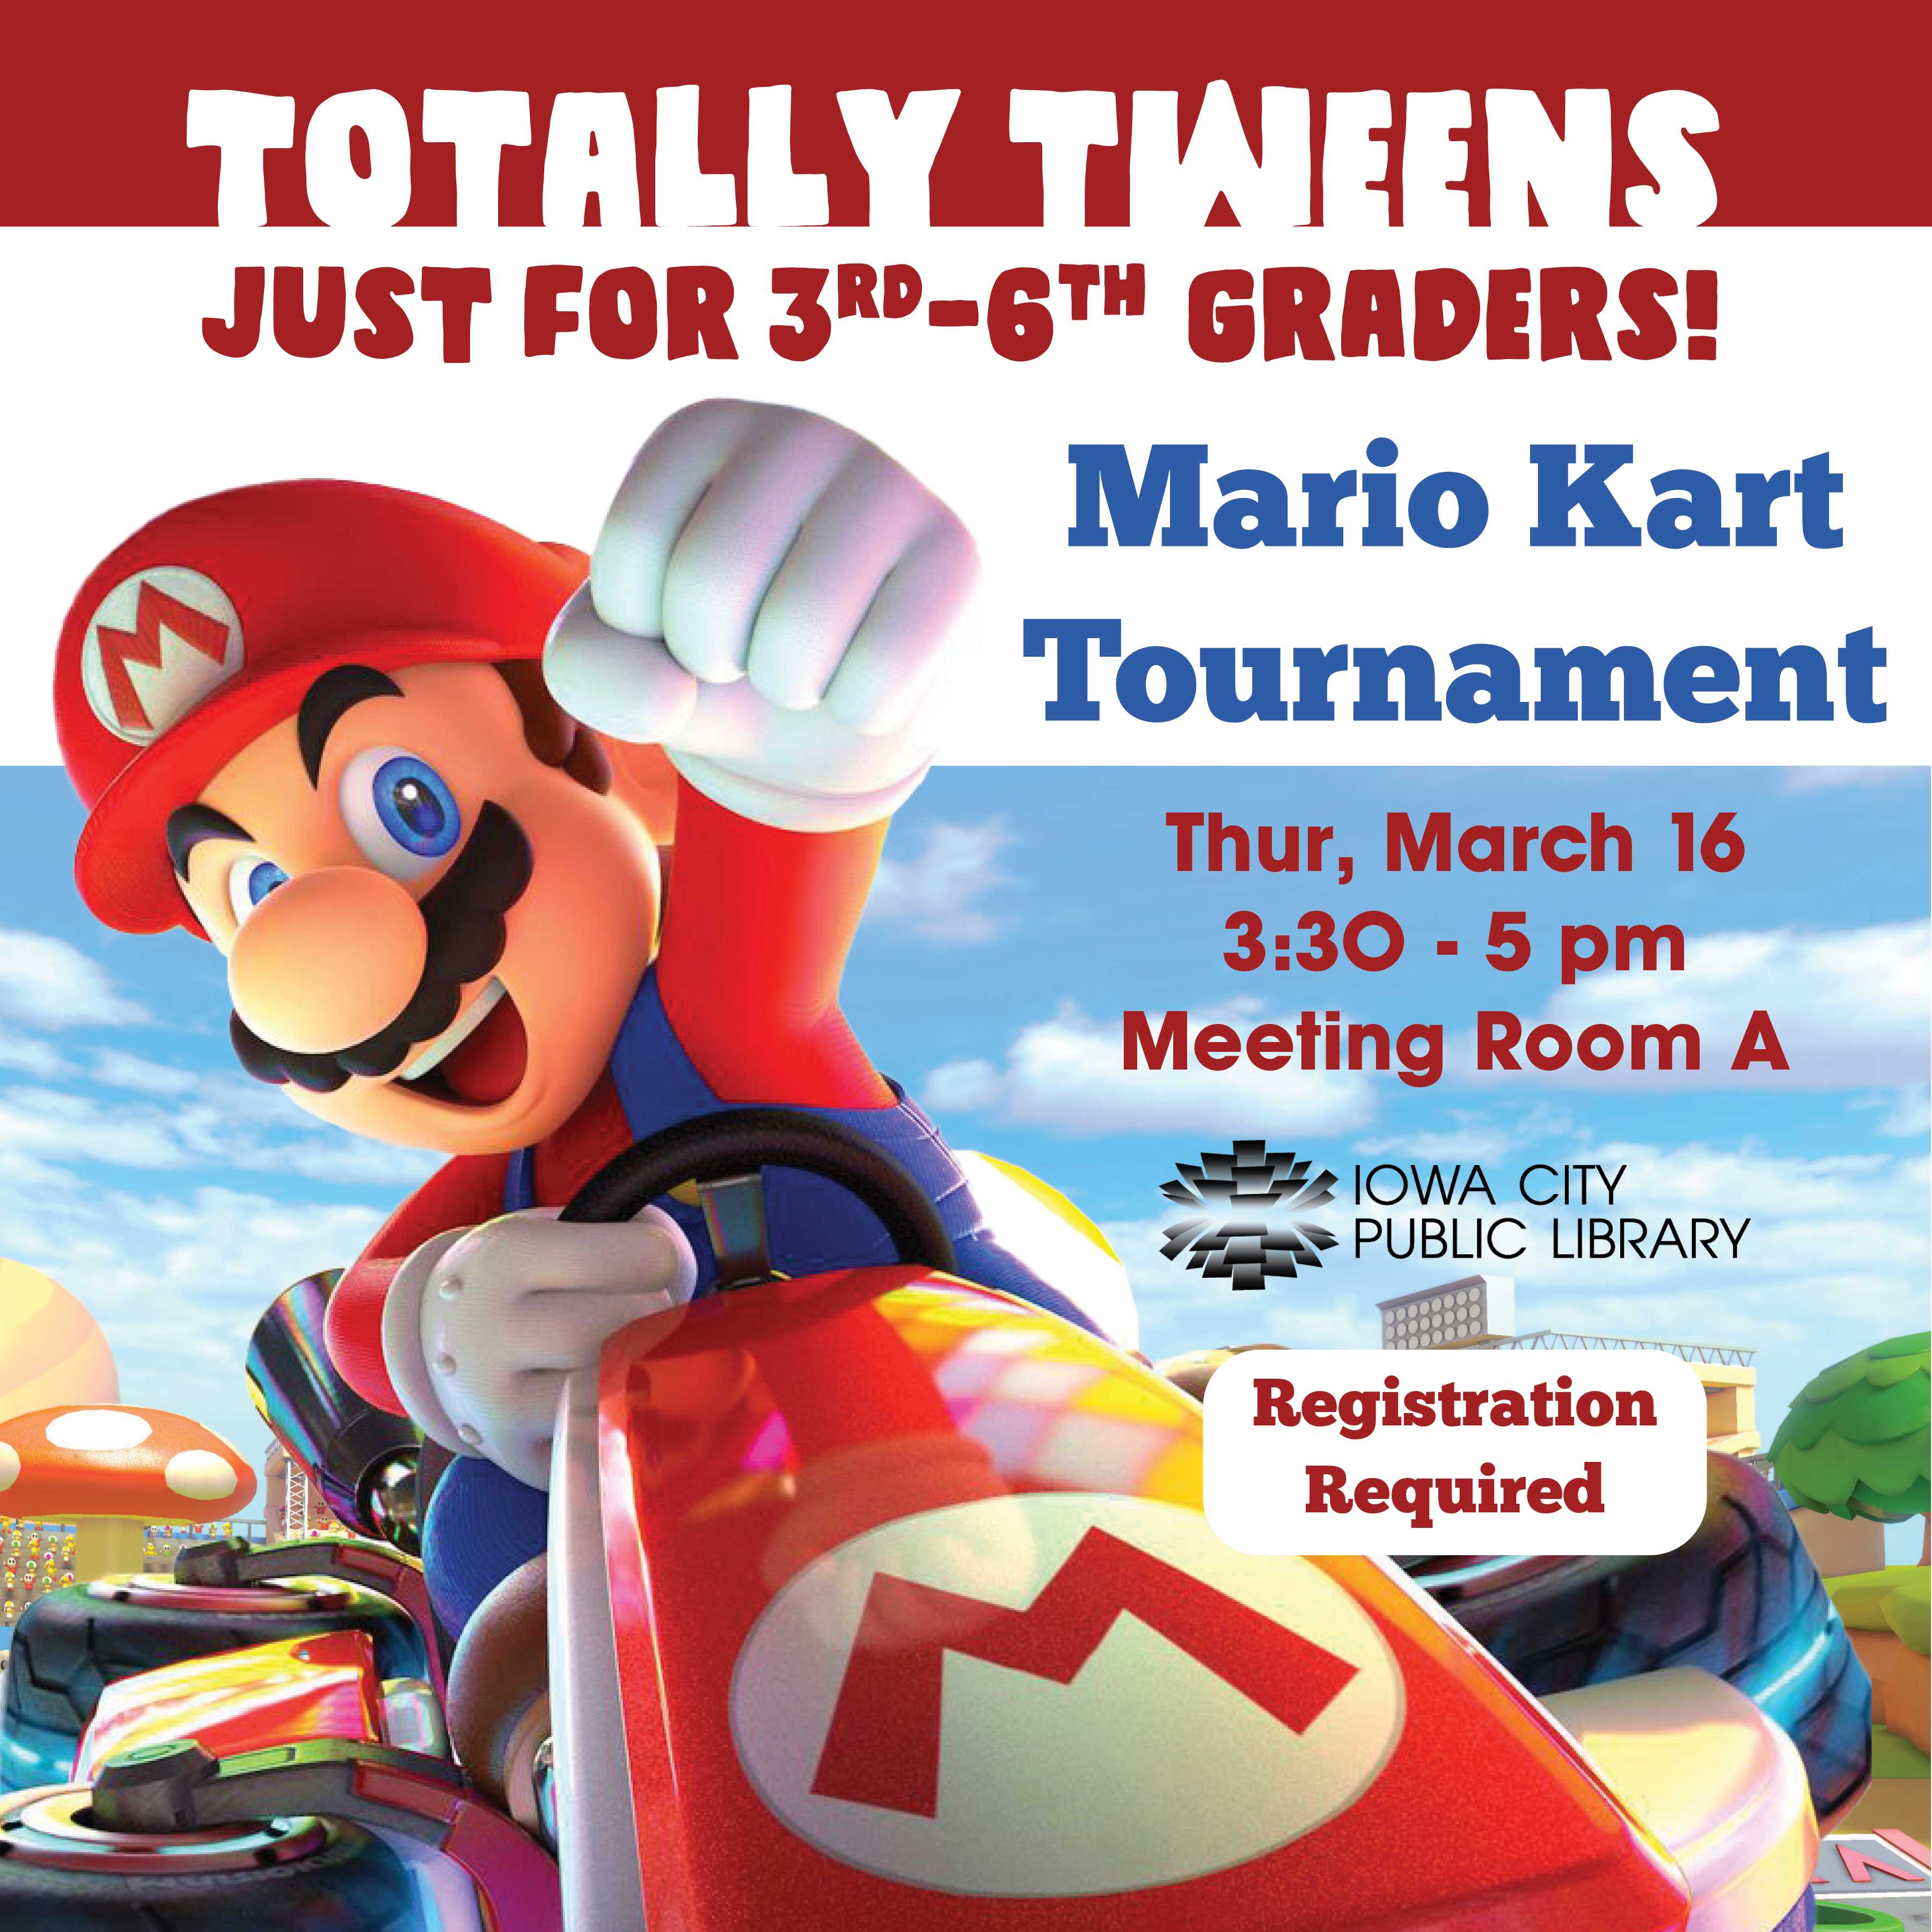 Teen Mario Kart Tournament